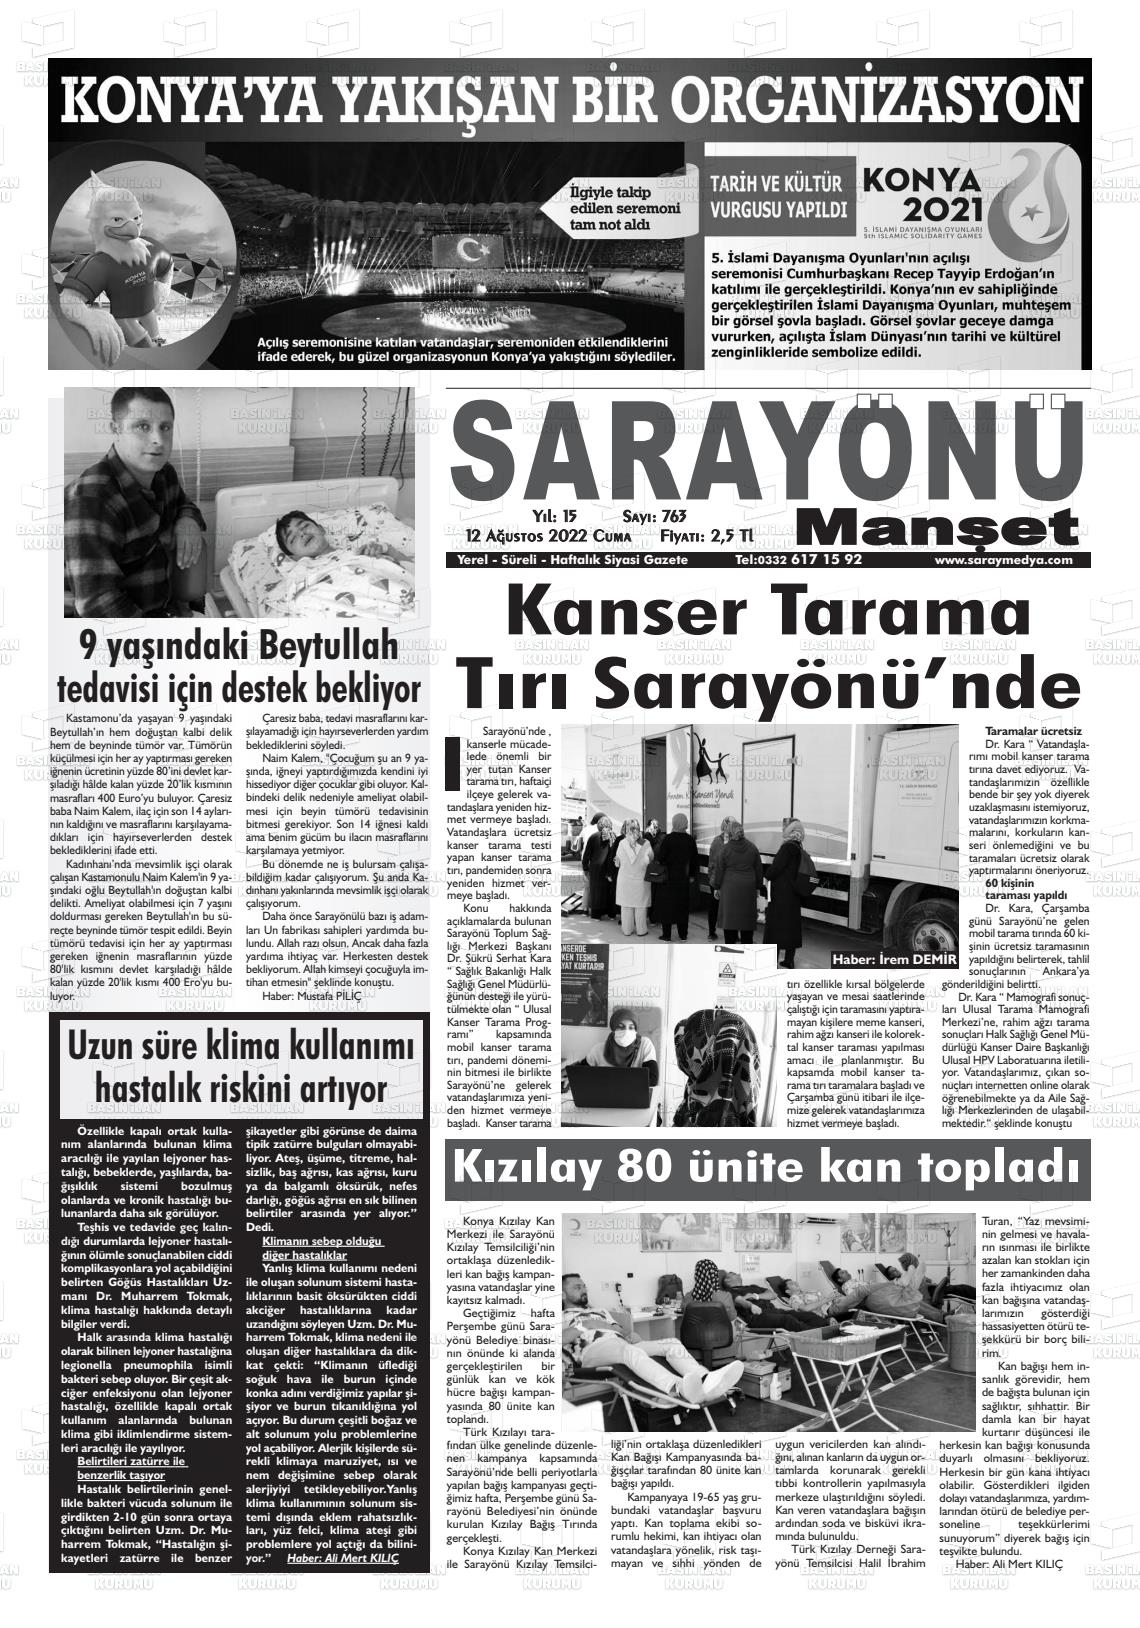 12 Ağustos 2022 Saray Medya Gazete Manşeti